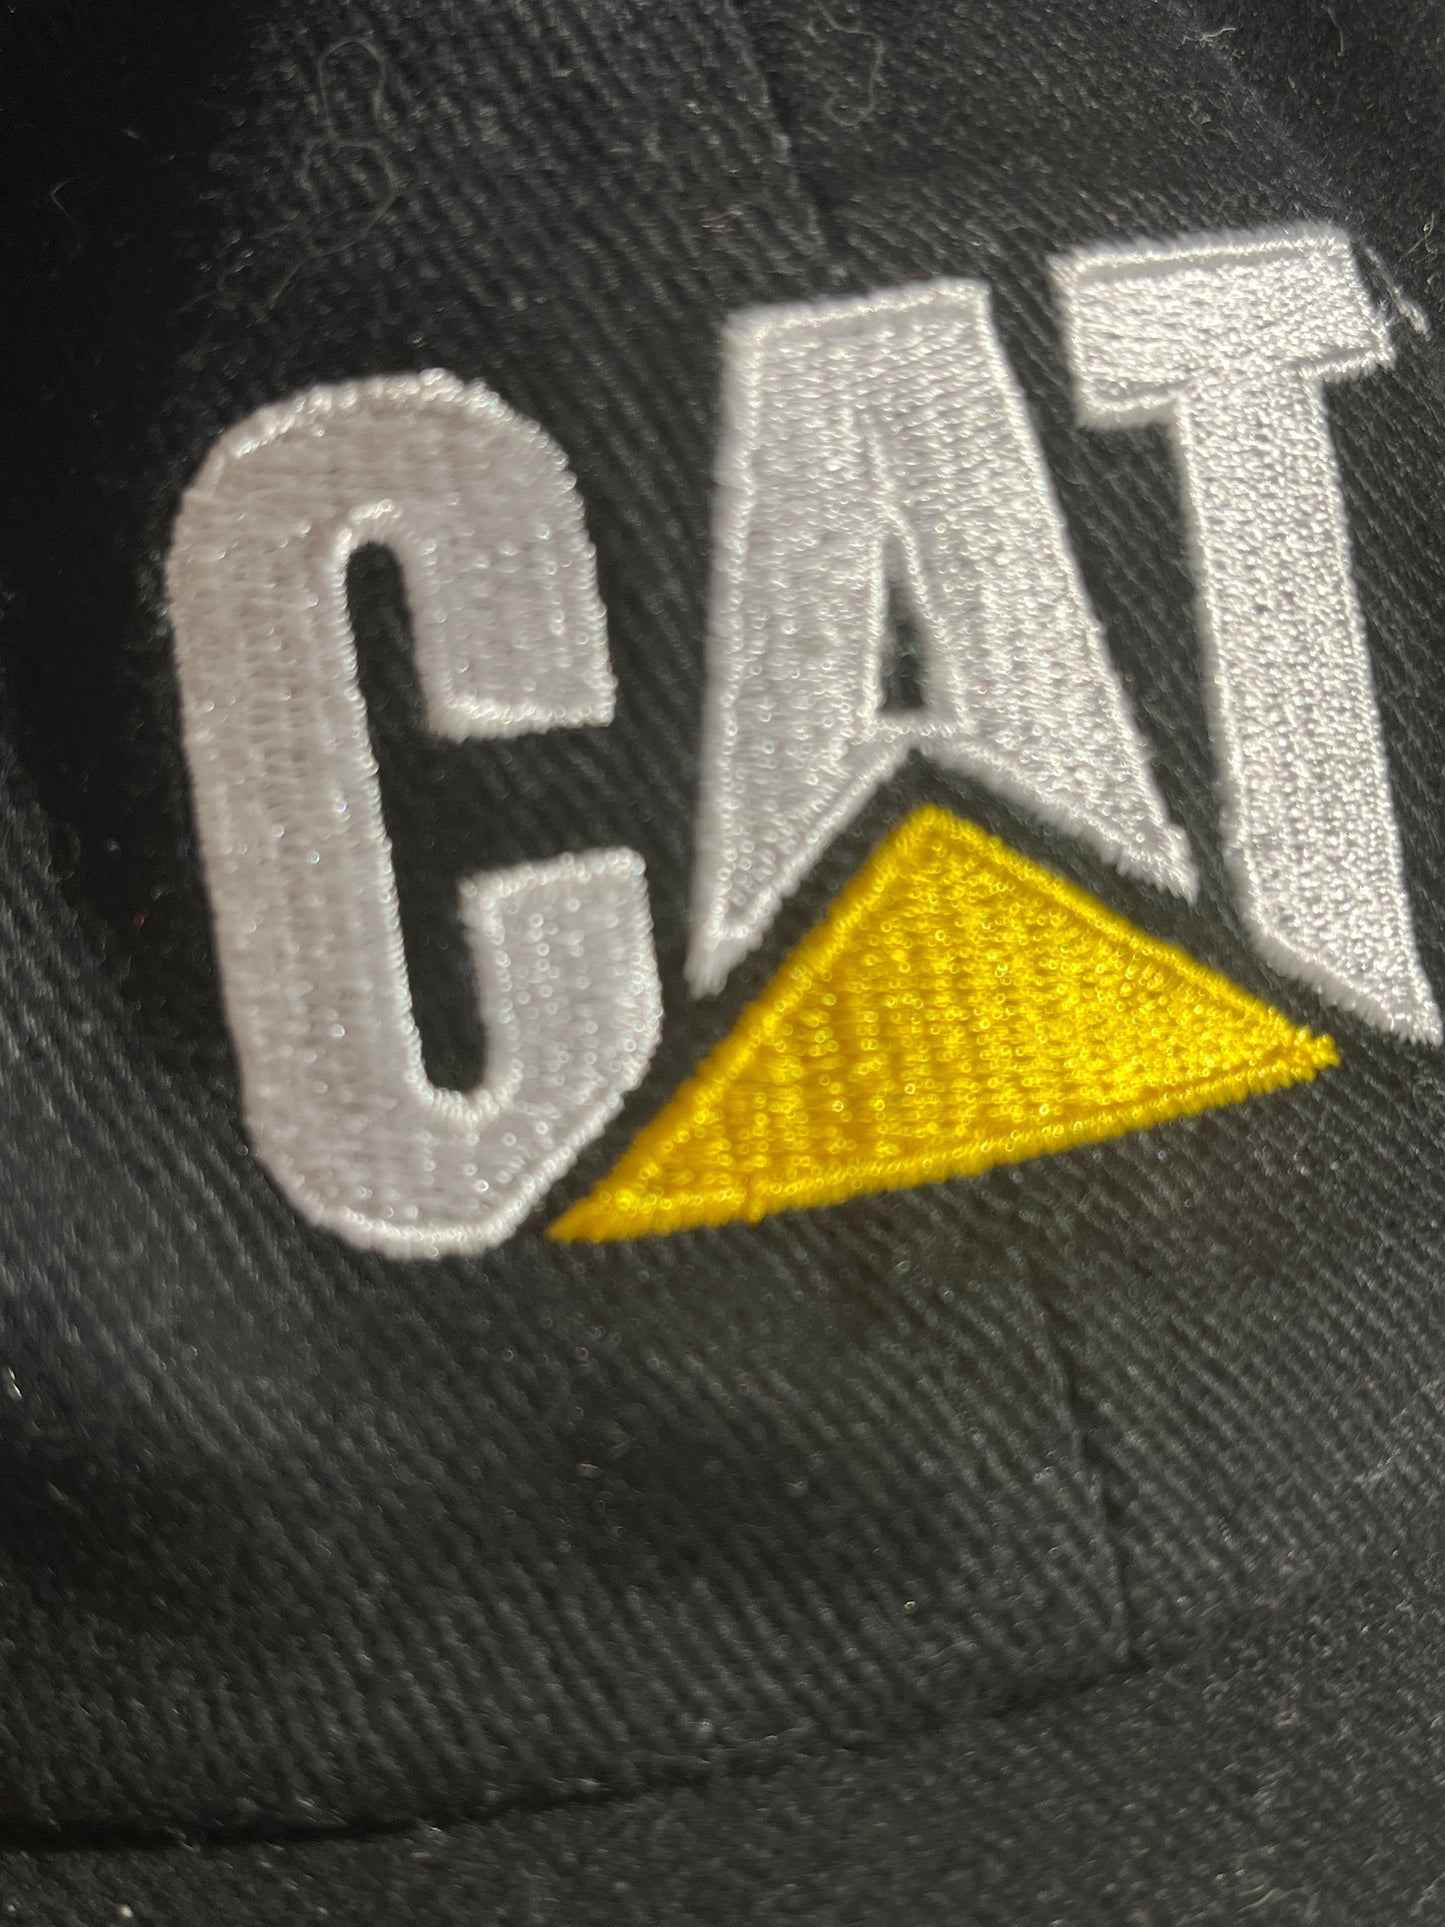 Vintage CAT Hat 🚜 Safety Training